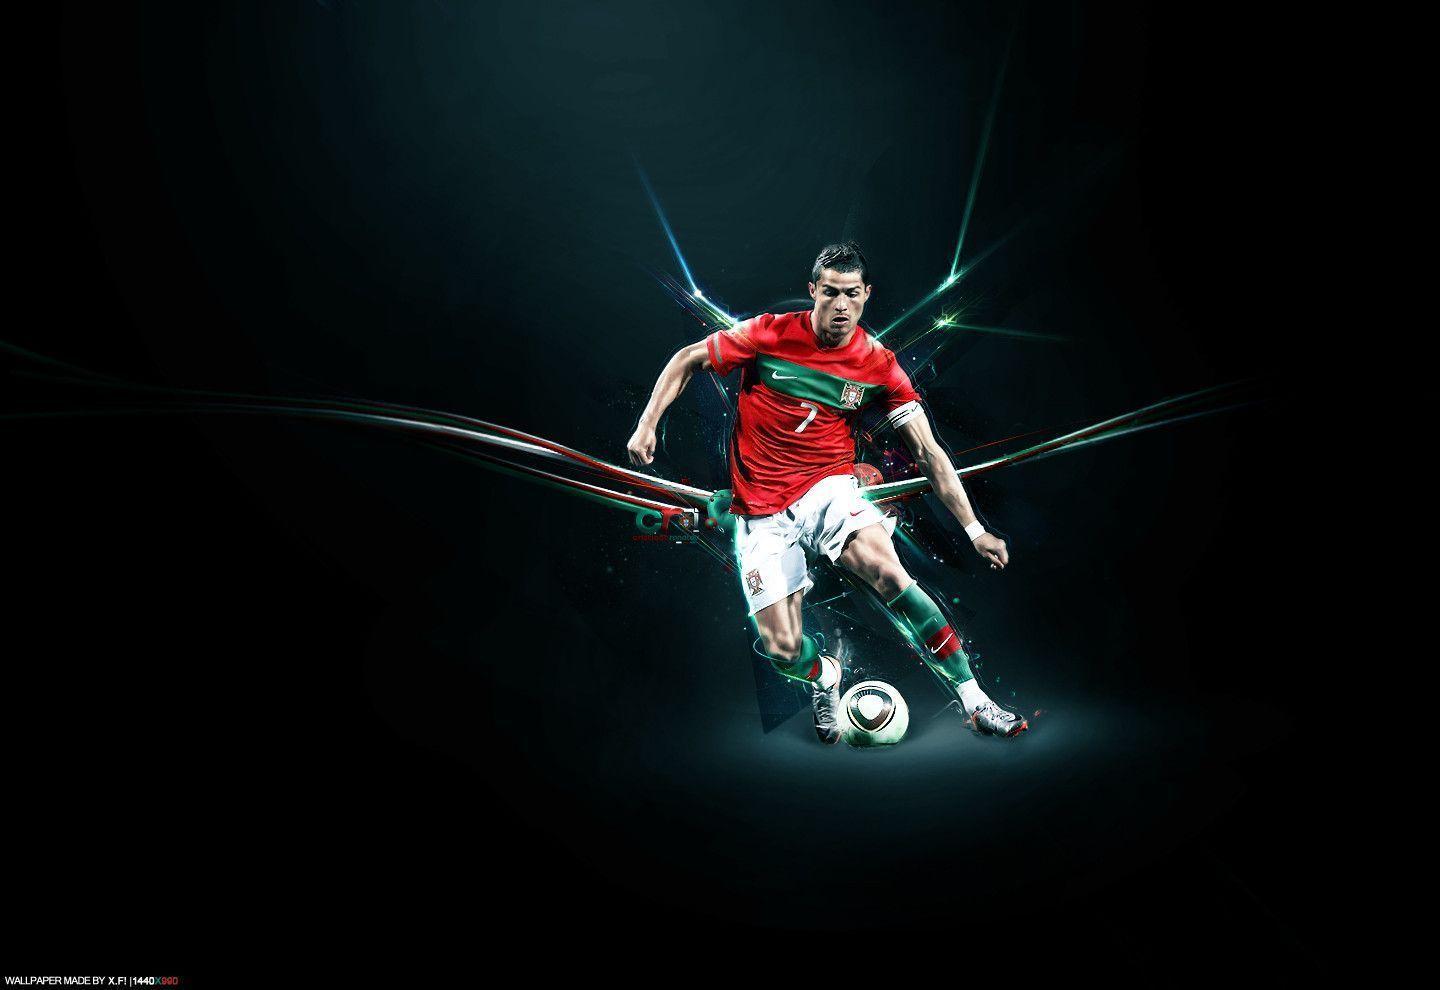 Portugal Cristiano Ronaldo Wallpaper. Download High Quality